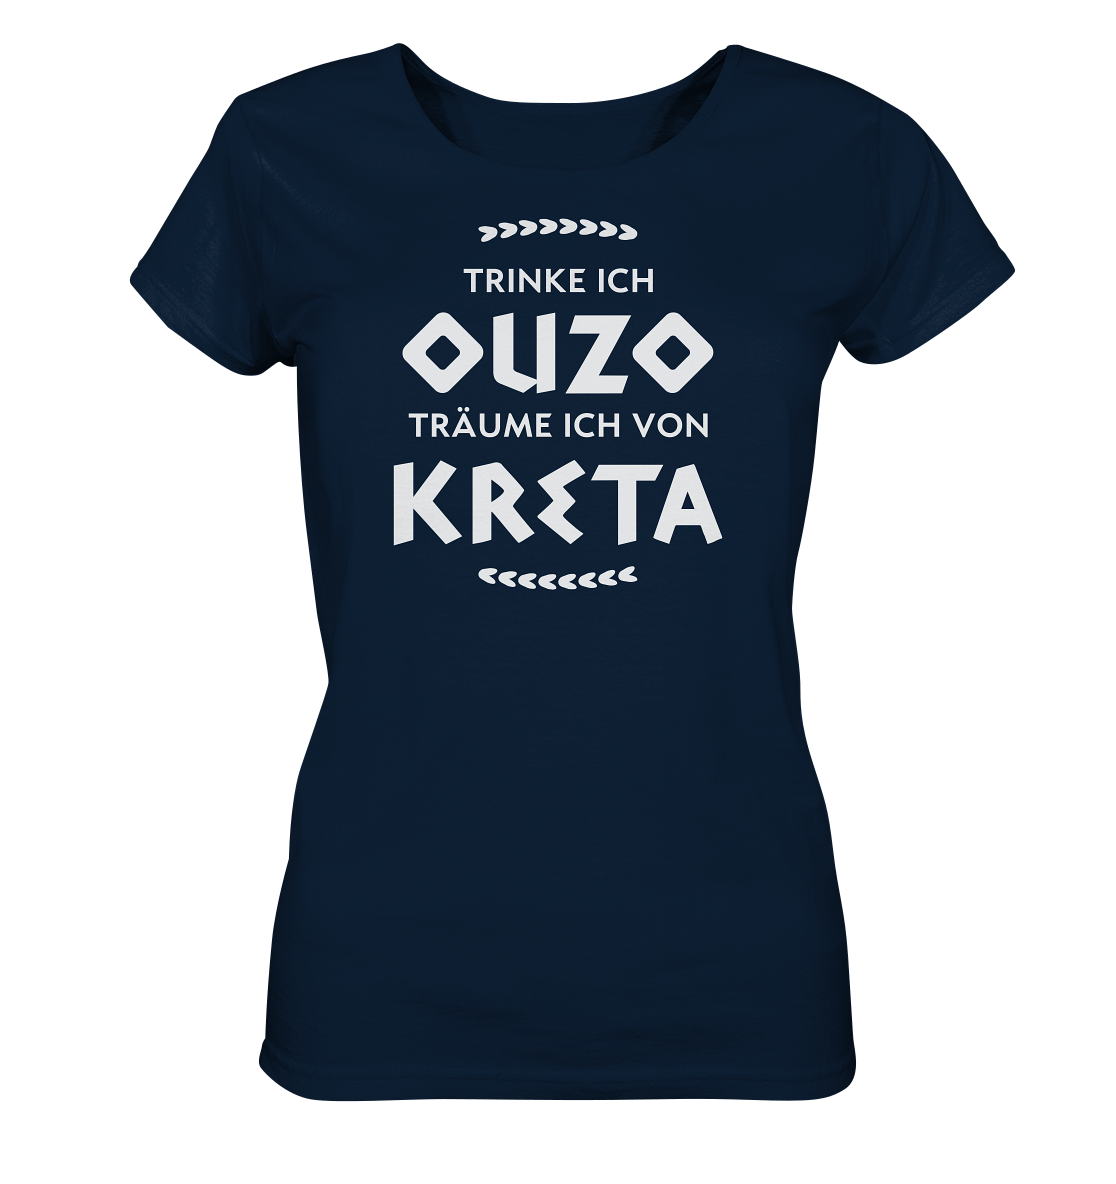 When I drink Ouzo I dream of Crete - Ladies Organic Shirt